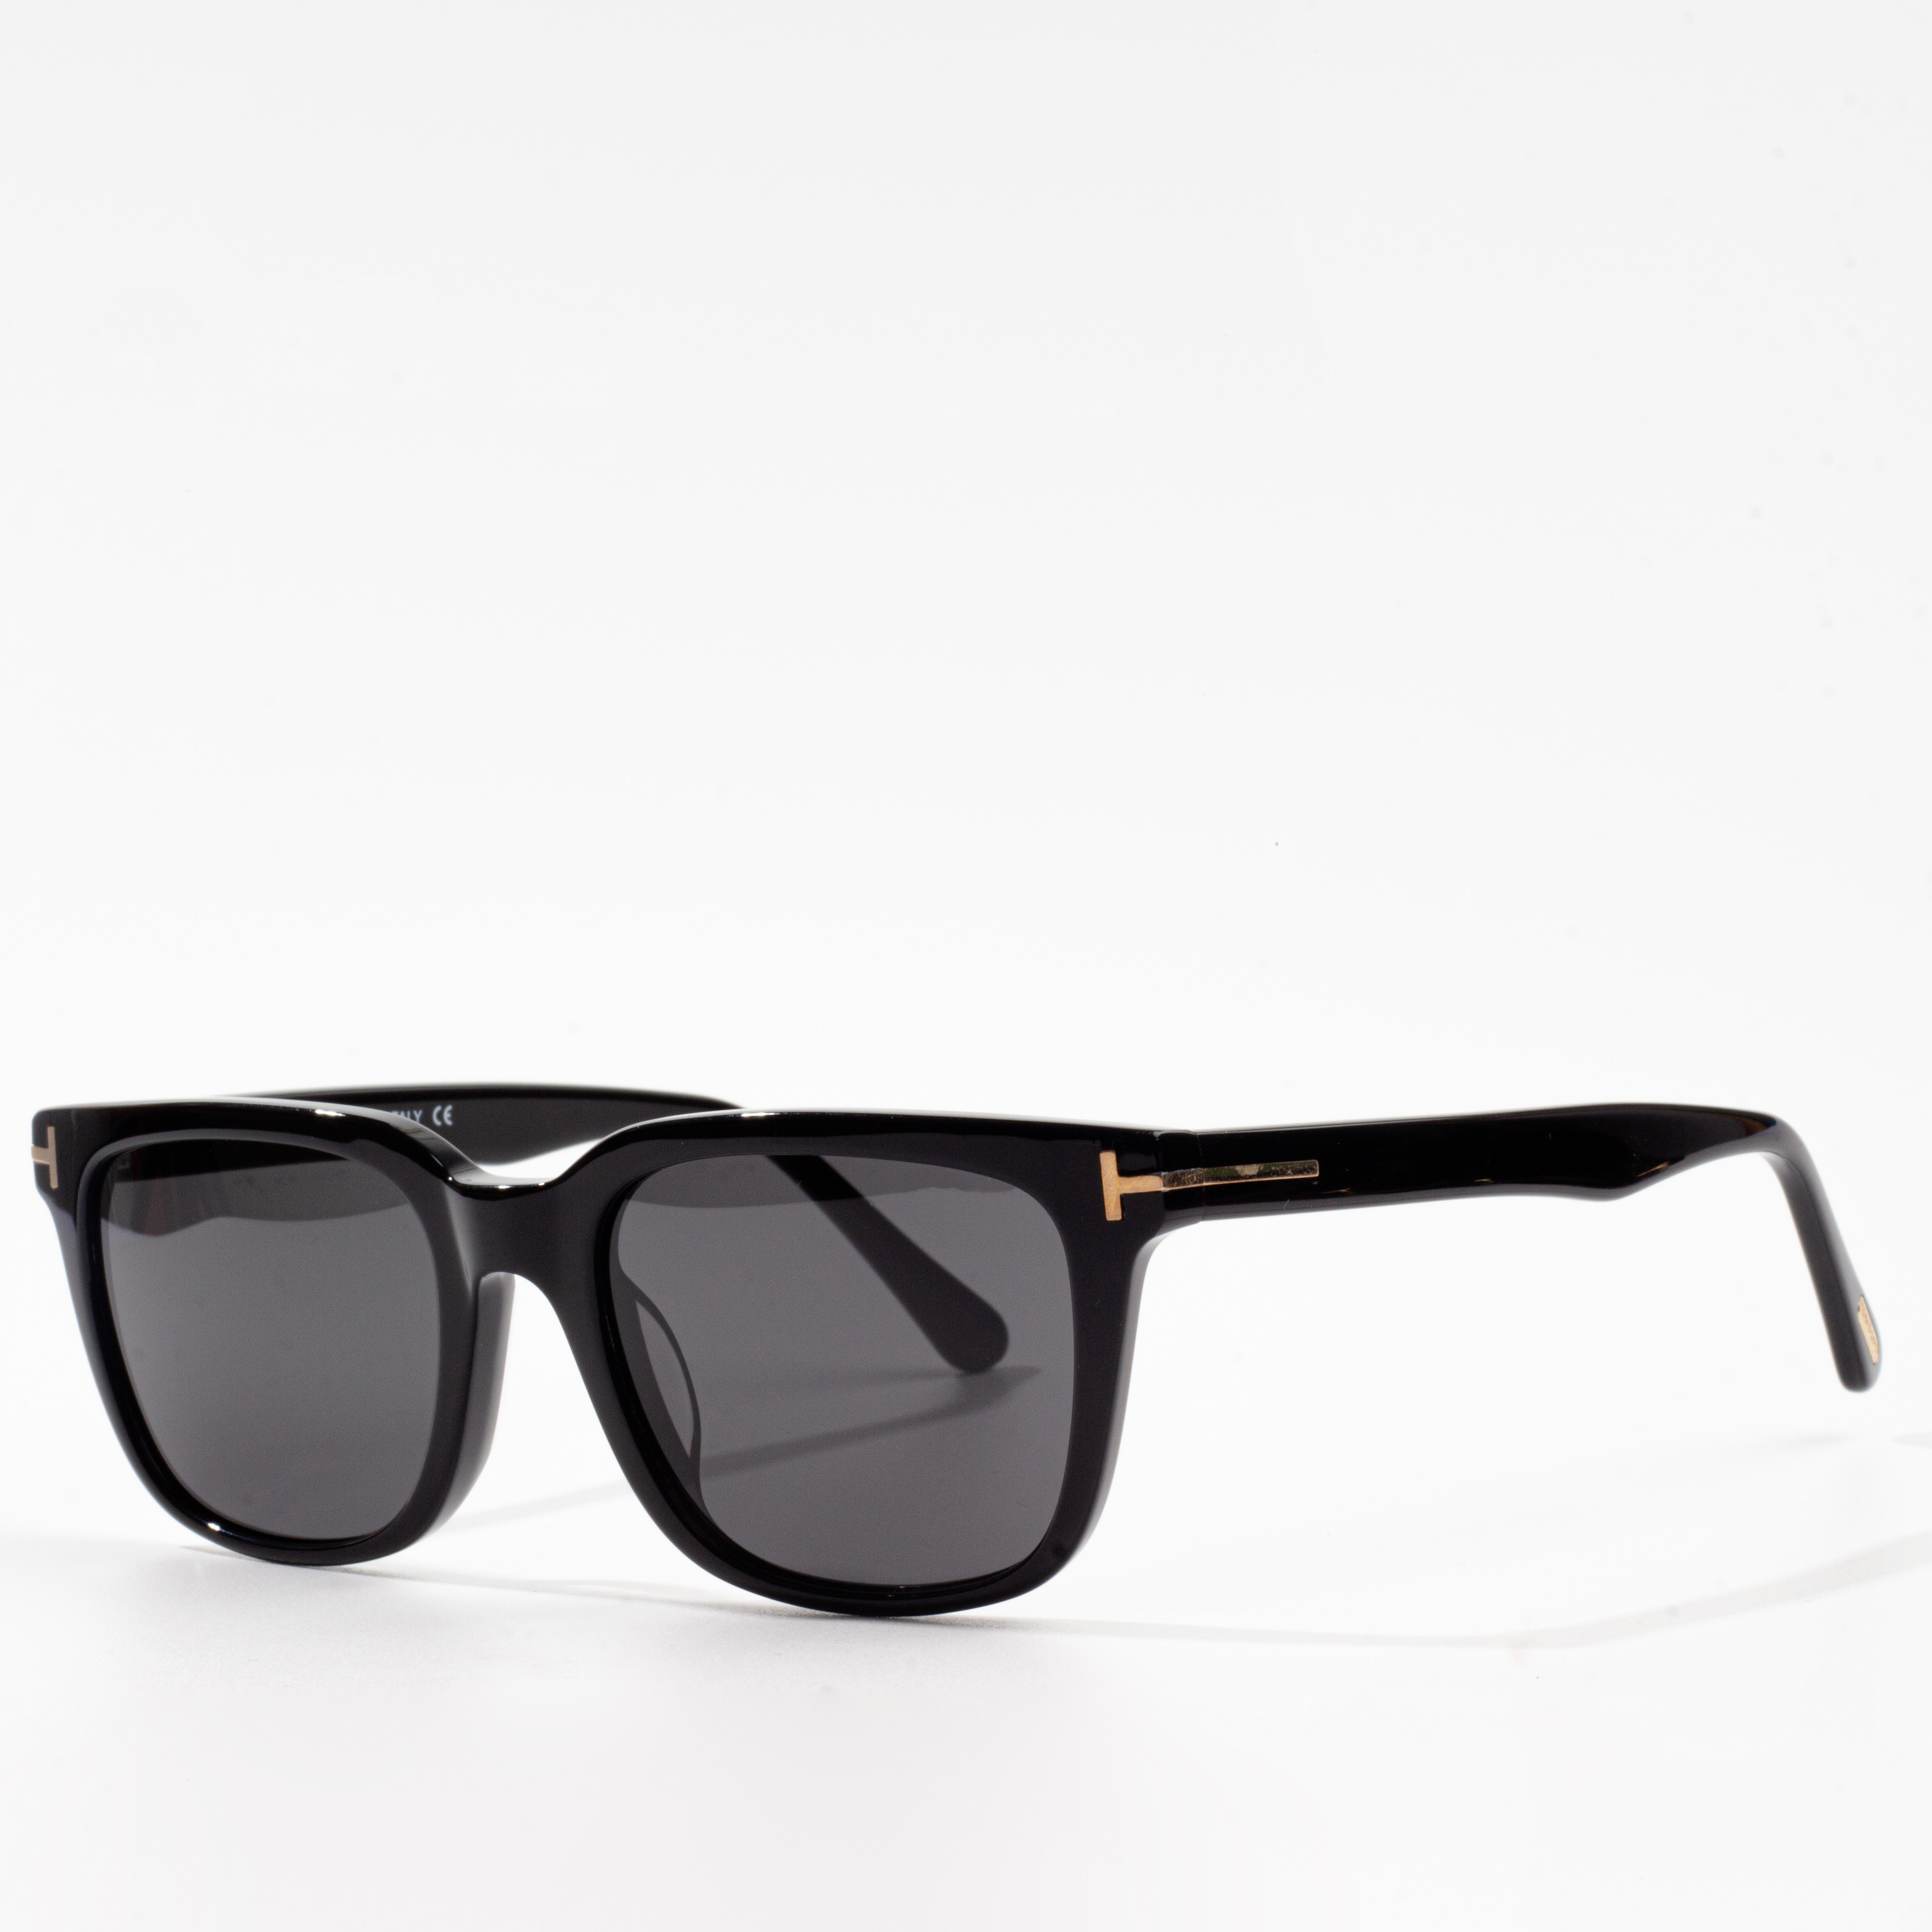 sunglasses wholesalers